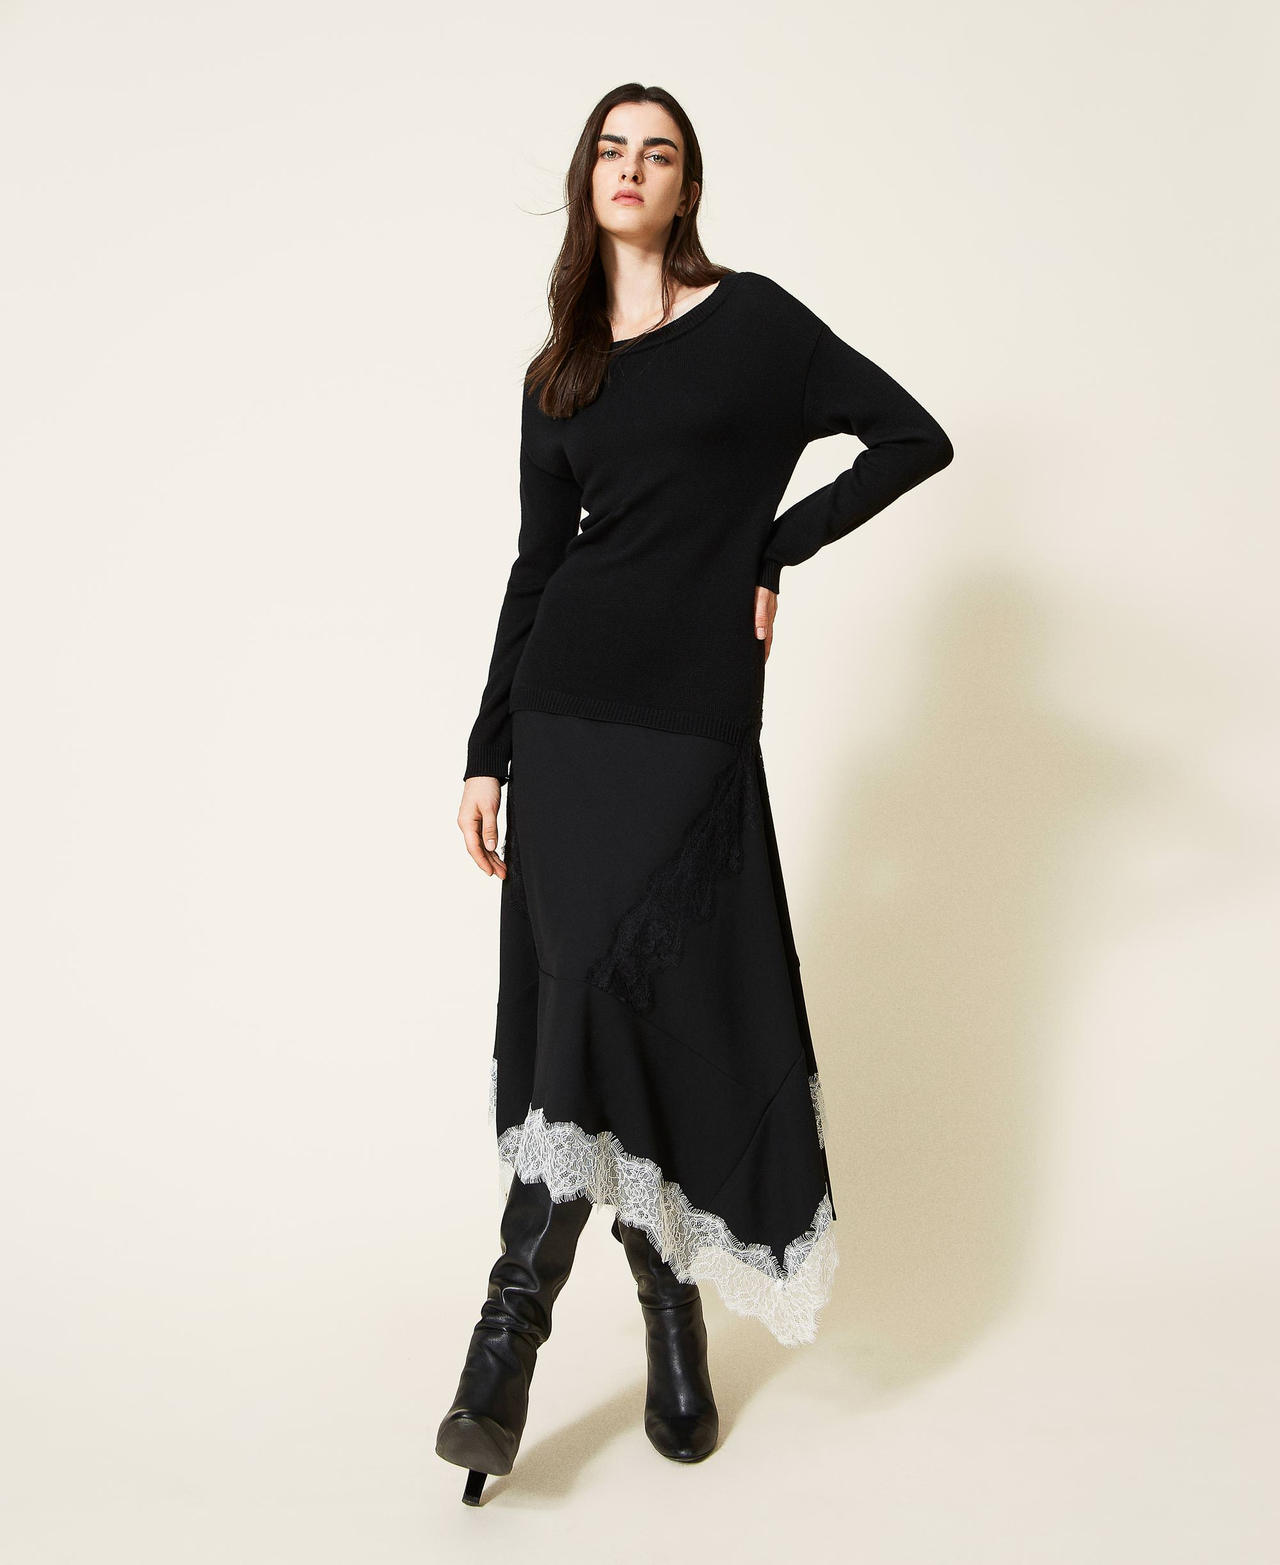 Robe mi-longue en maille avec insertion Bicolore Noir / Blanc Neige Femme 222TT3283-02